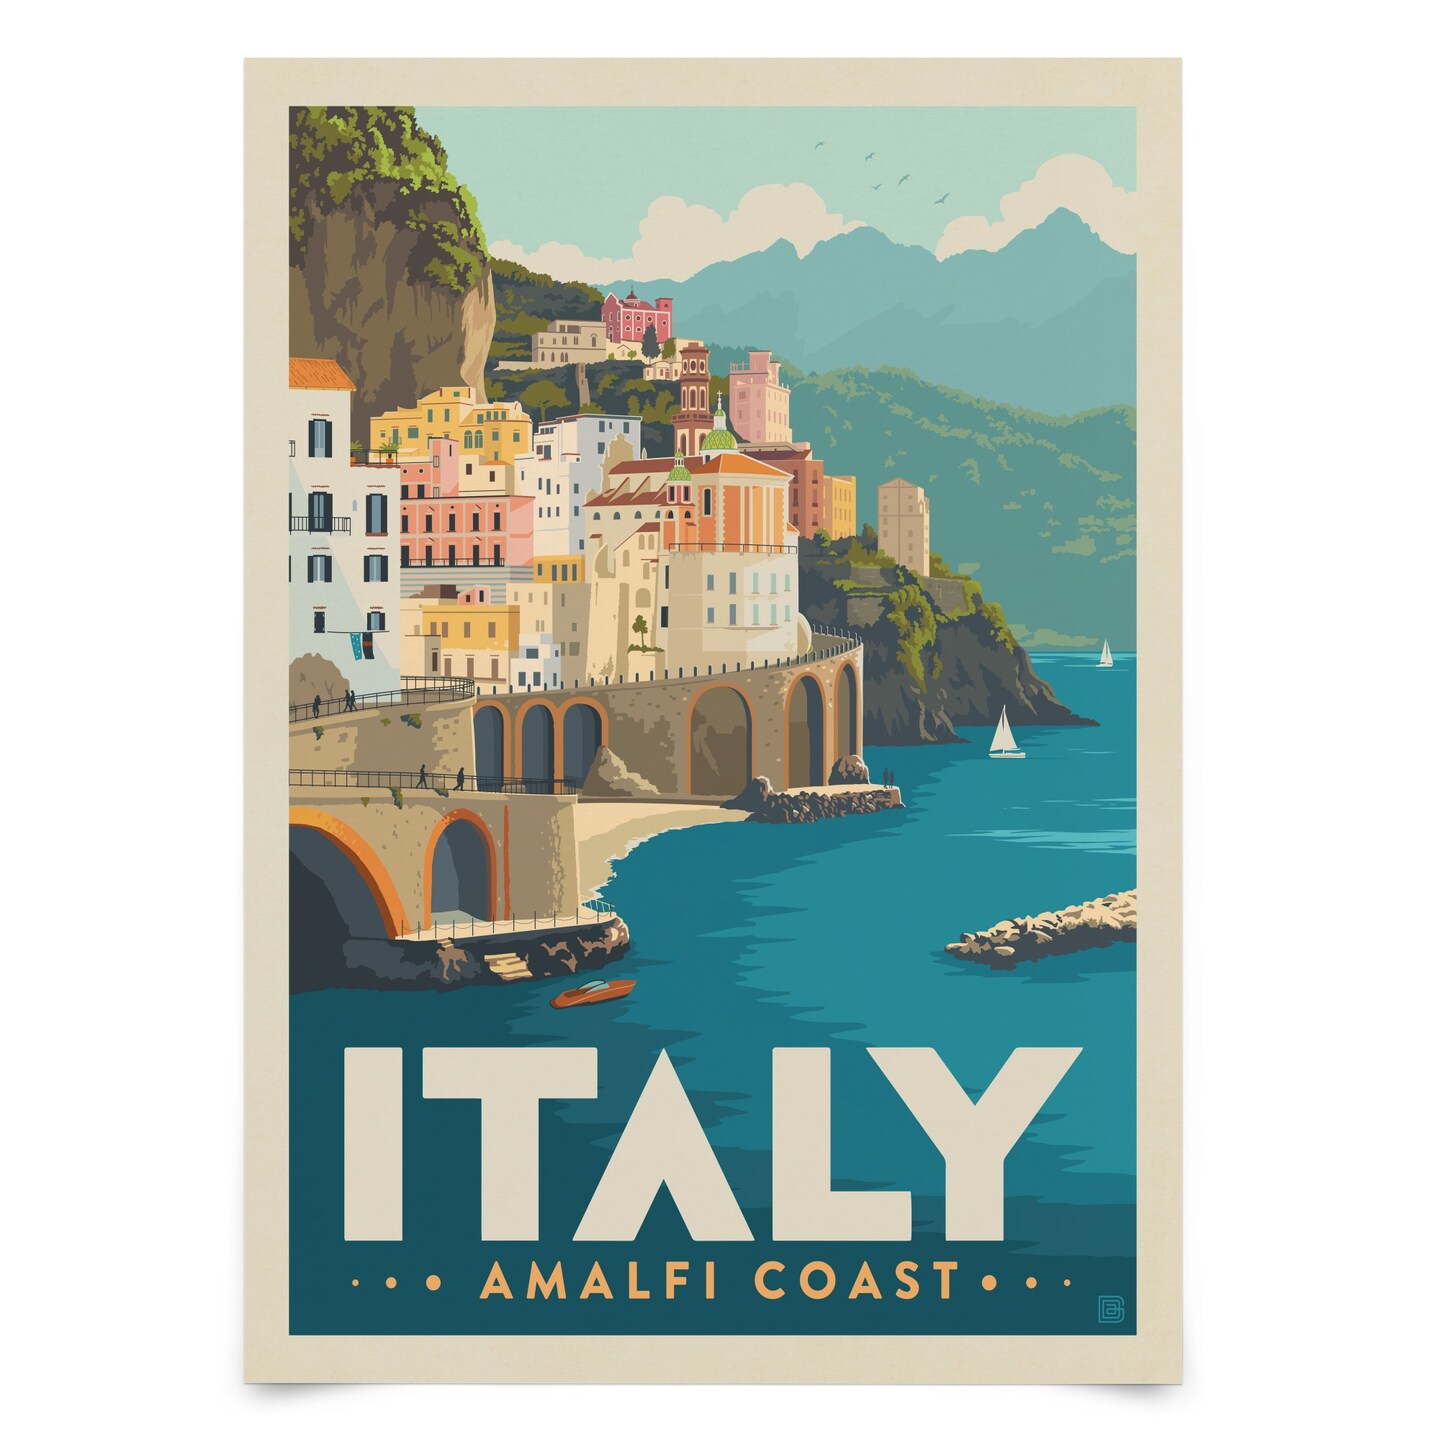 Italy Amalfi Coast by Joel Anderson Poster Art Print  - Americanflat